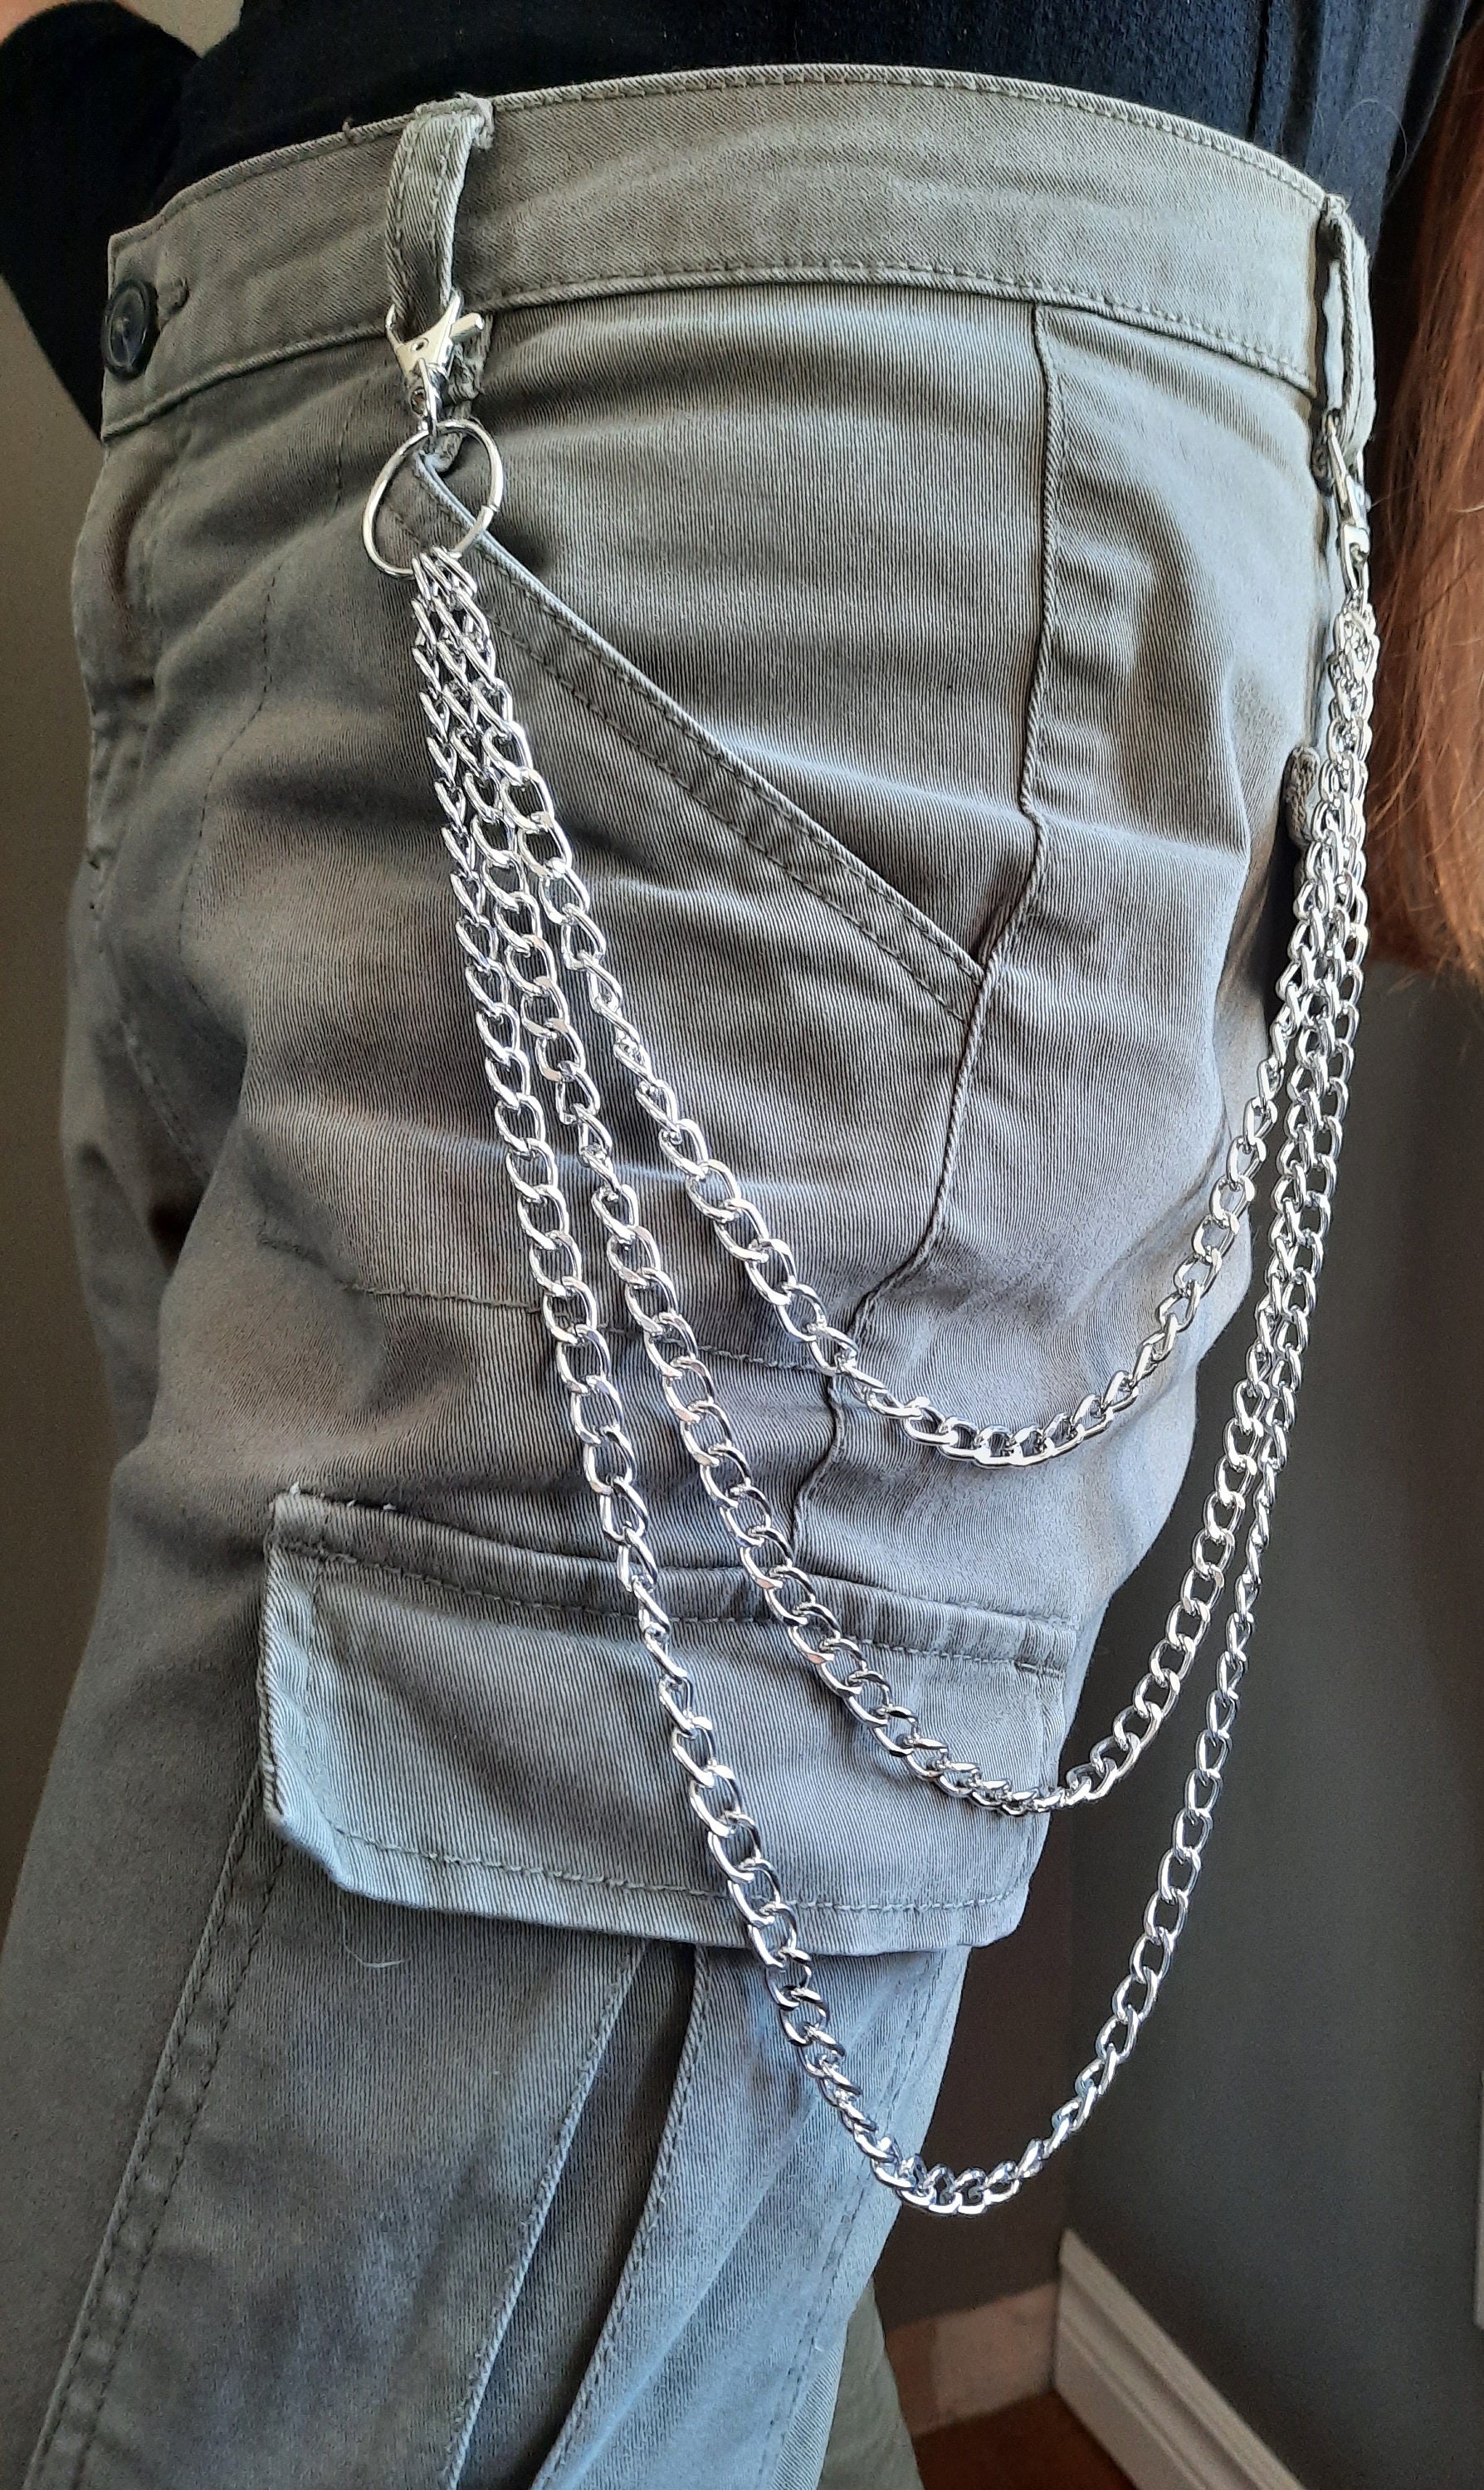 Chains For Jeans - Keychains, Wallet Chain, Belt Chain, Punk Goth Grunge  90s Alternative Style